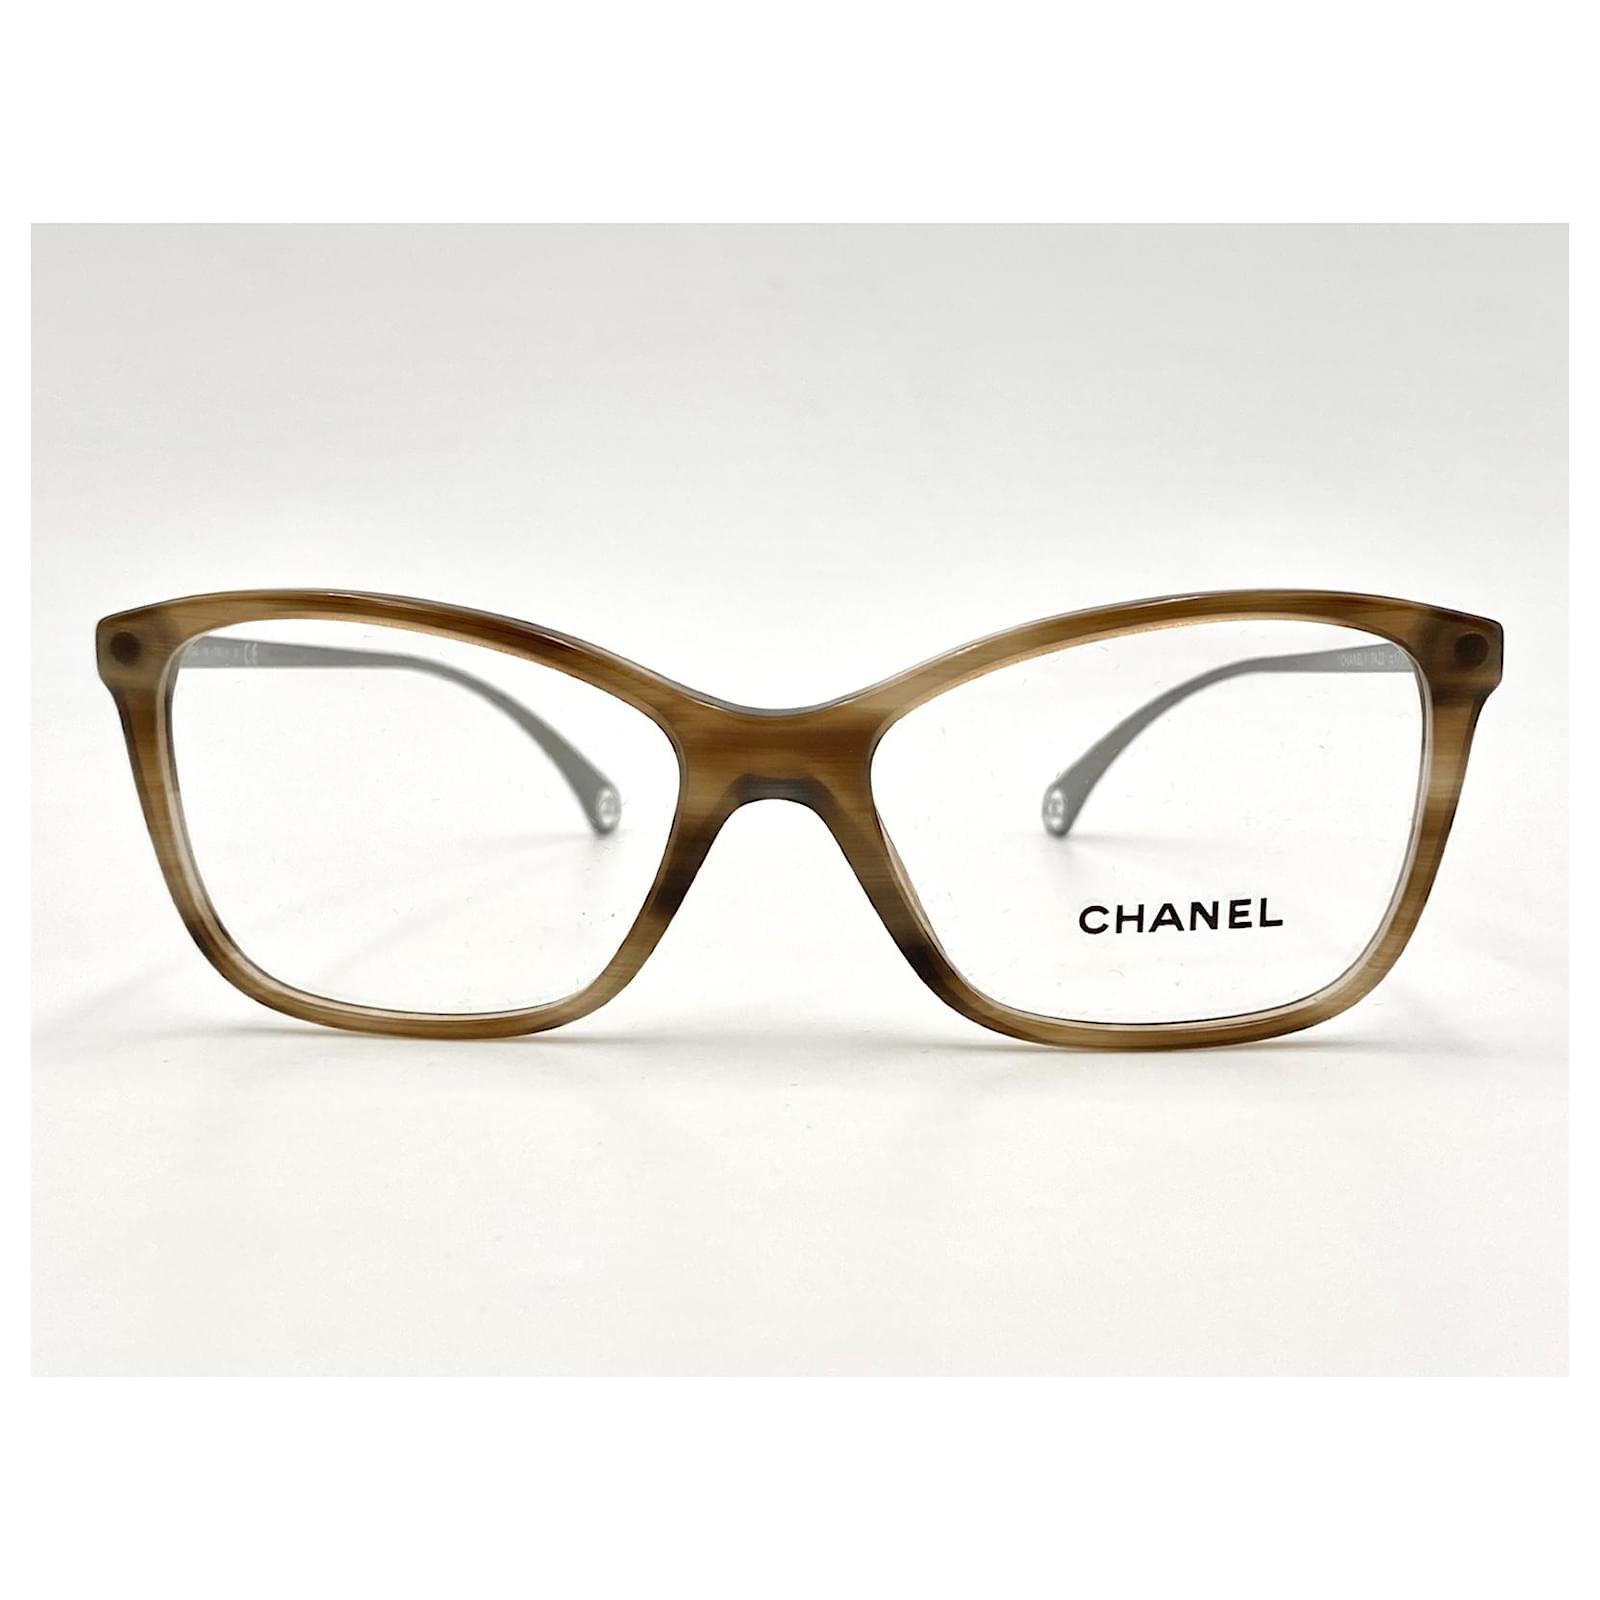 Chanel Rectangle Eyeglasses - Acetate, Taupe - Women's Sunglasses - 3414 1723